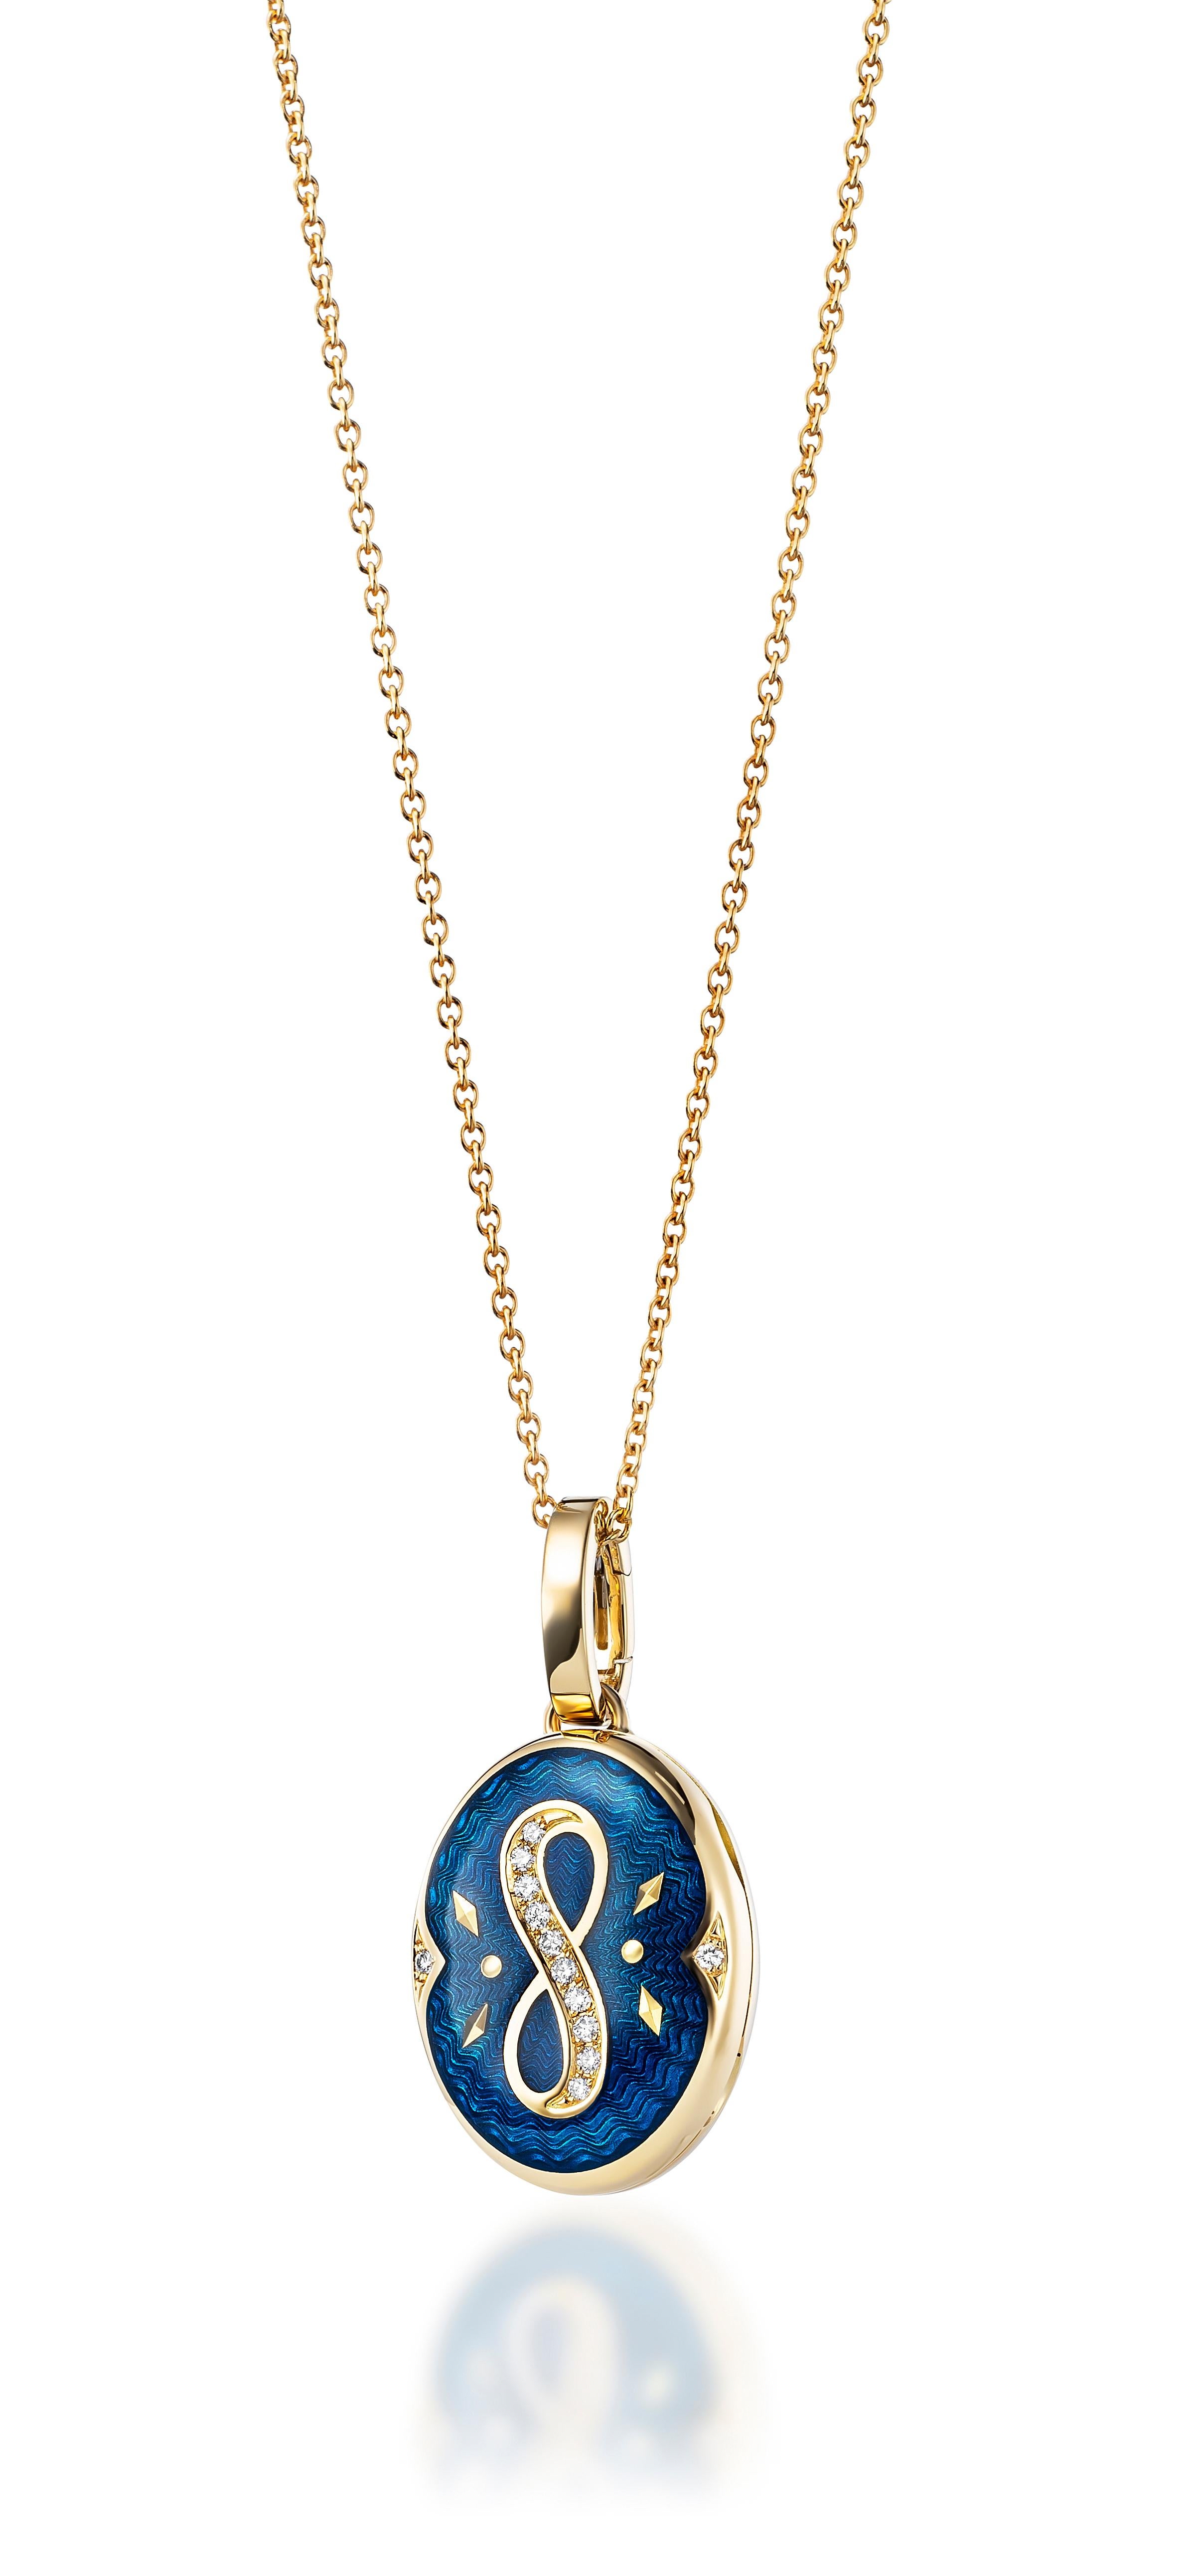 Oval Locket Pendant Necklace 18k Yellow Gold Blue Enamel 12 Diamonds 0.08 ct GVS For Sale 3